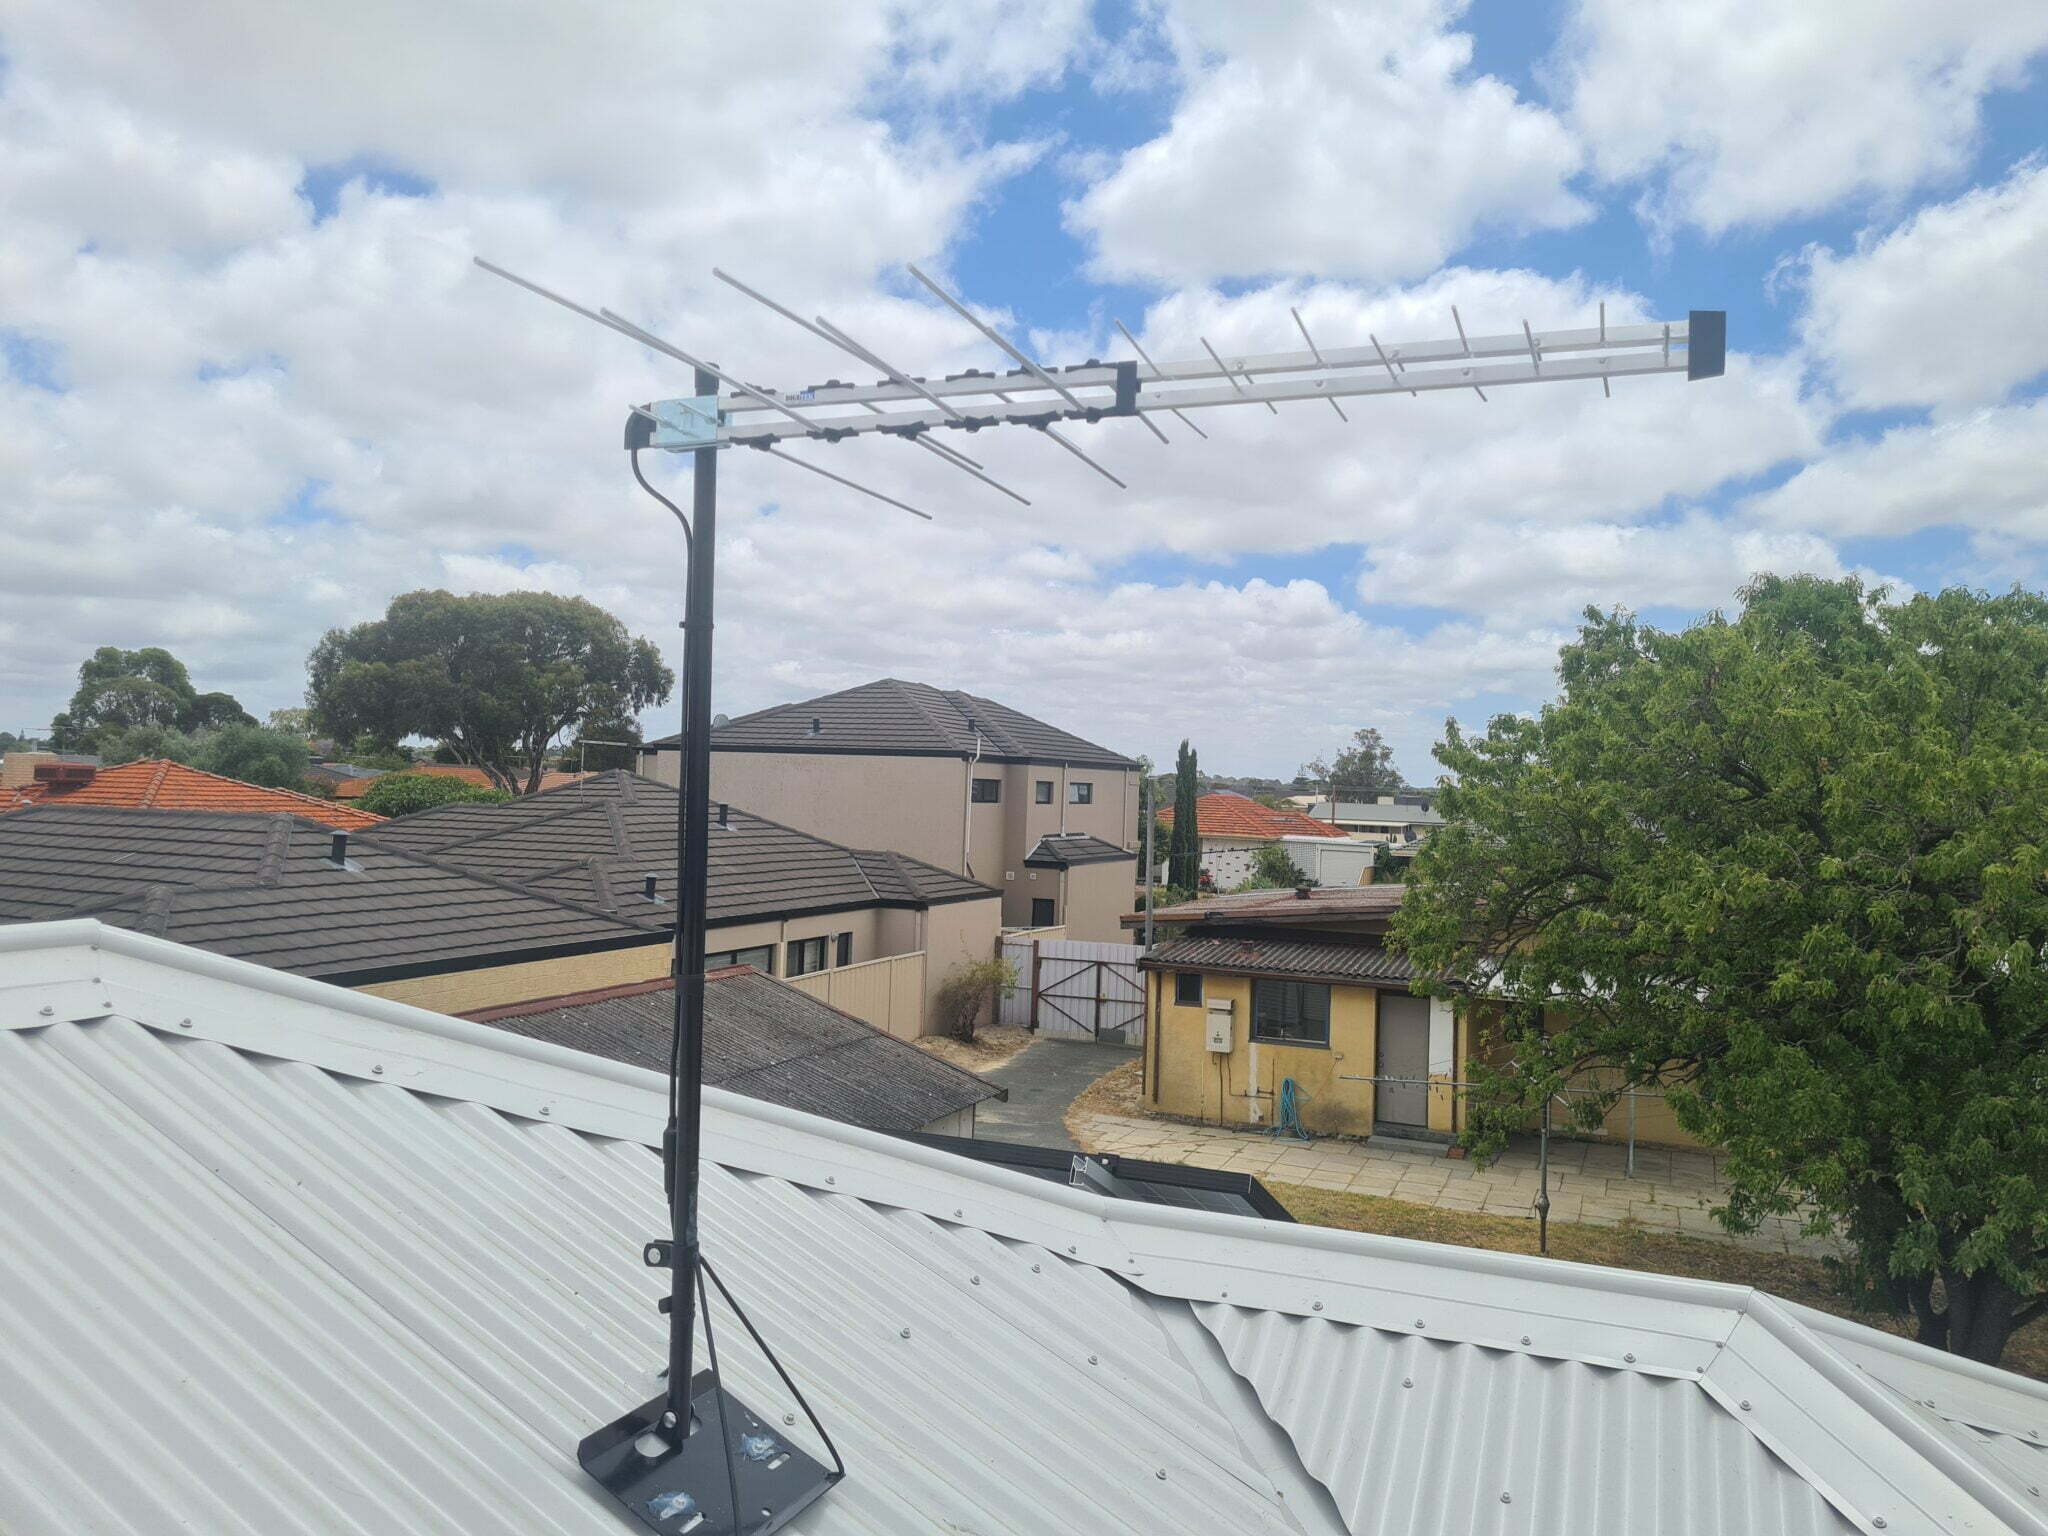 Tv Antenna Balga Tv Antennas Perth Installations Repair